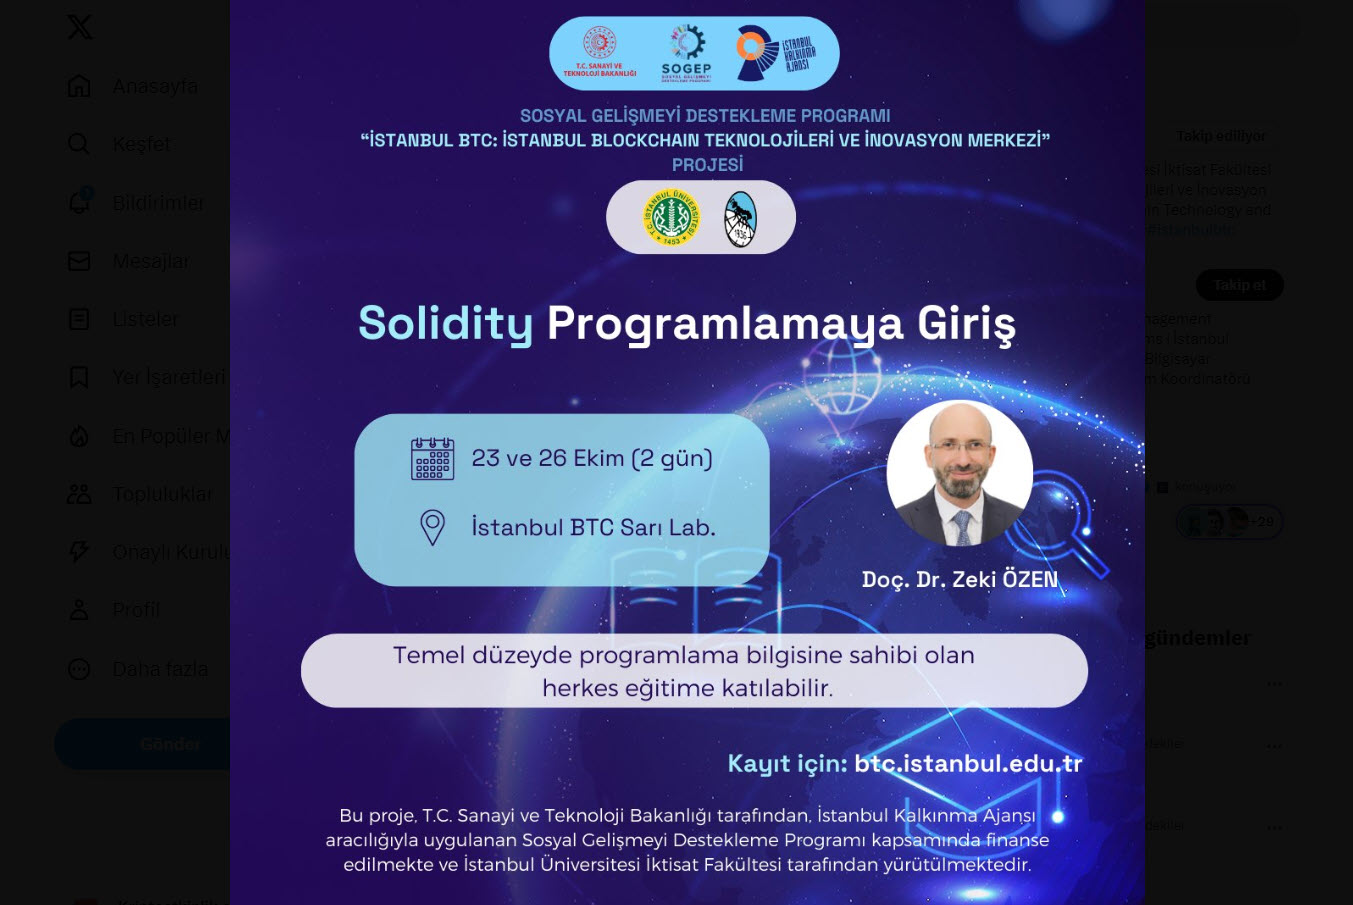 Solidity Programlamaya Giriş Eğitimi - Ücretsiz!